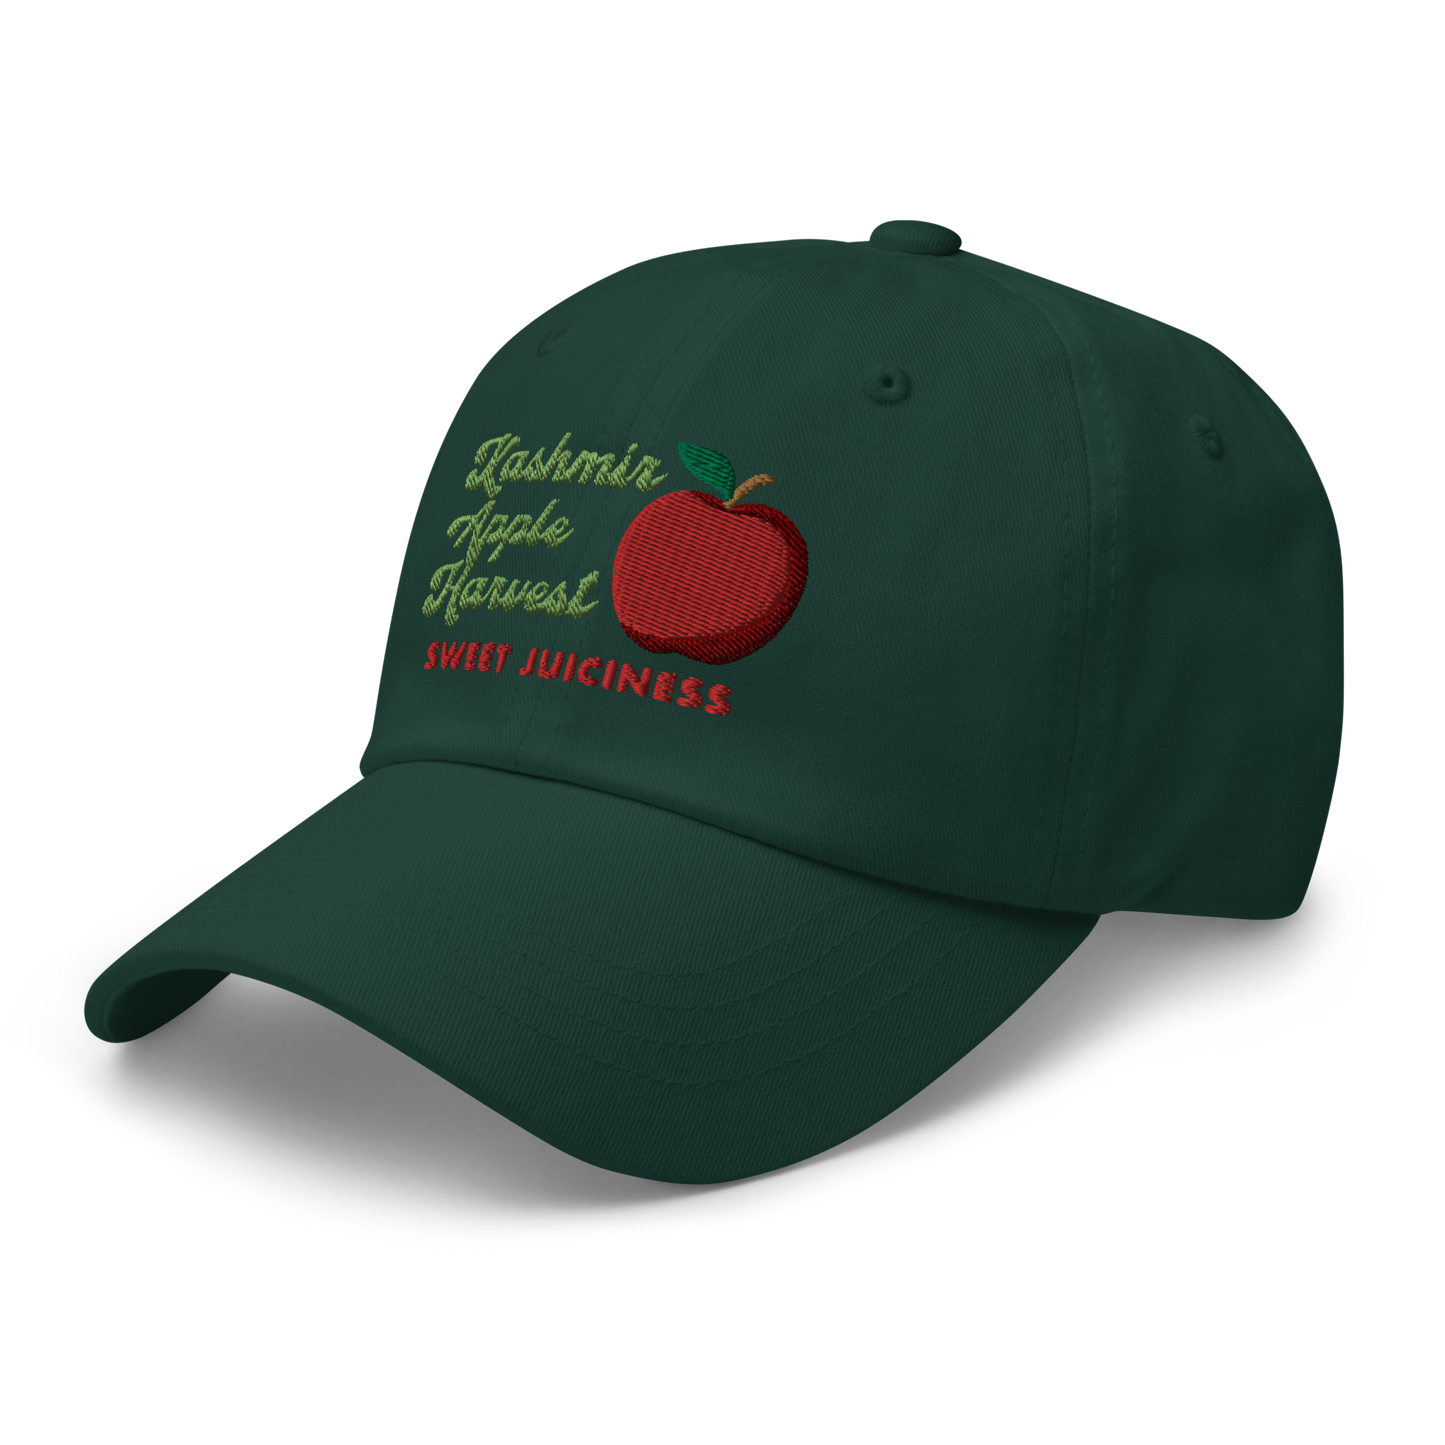 Kashmir Apple Harvest